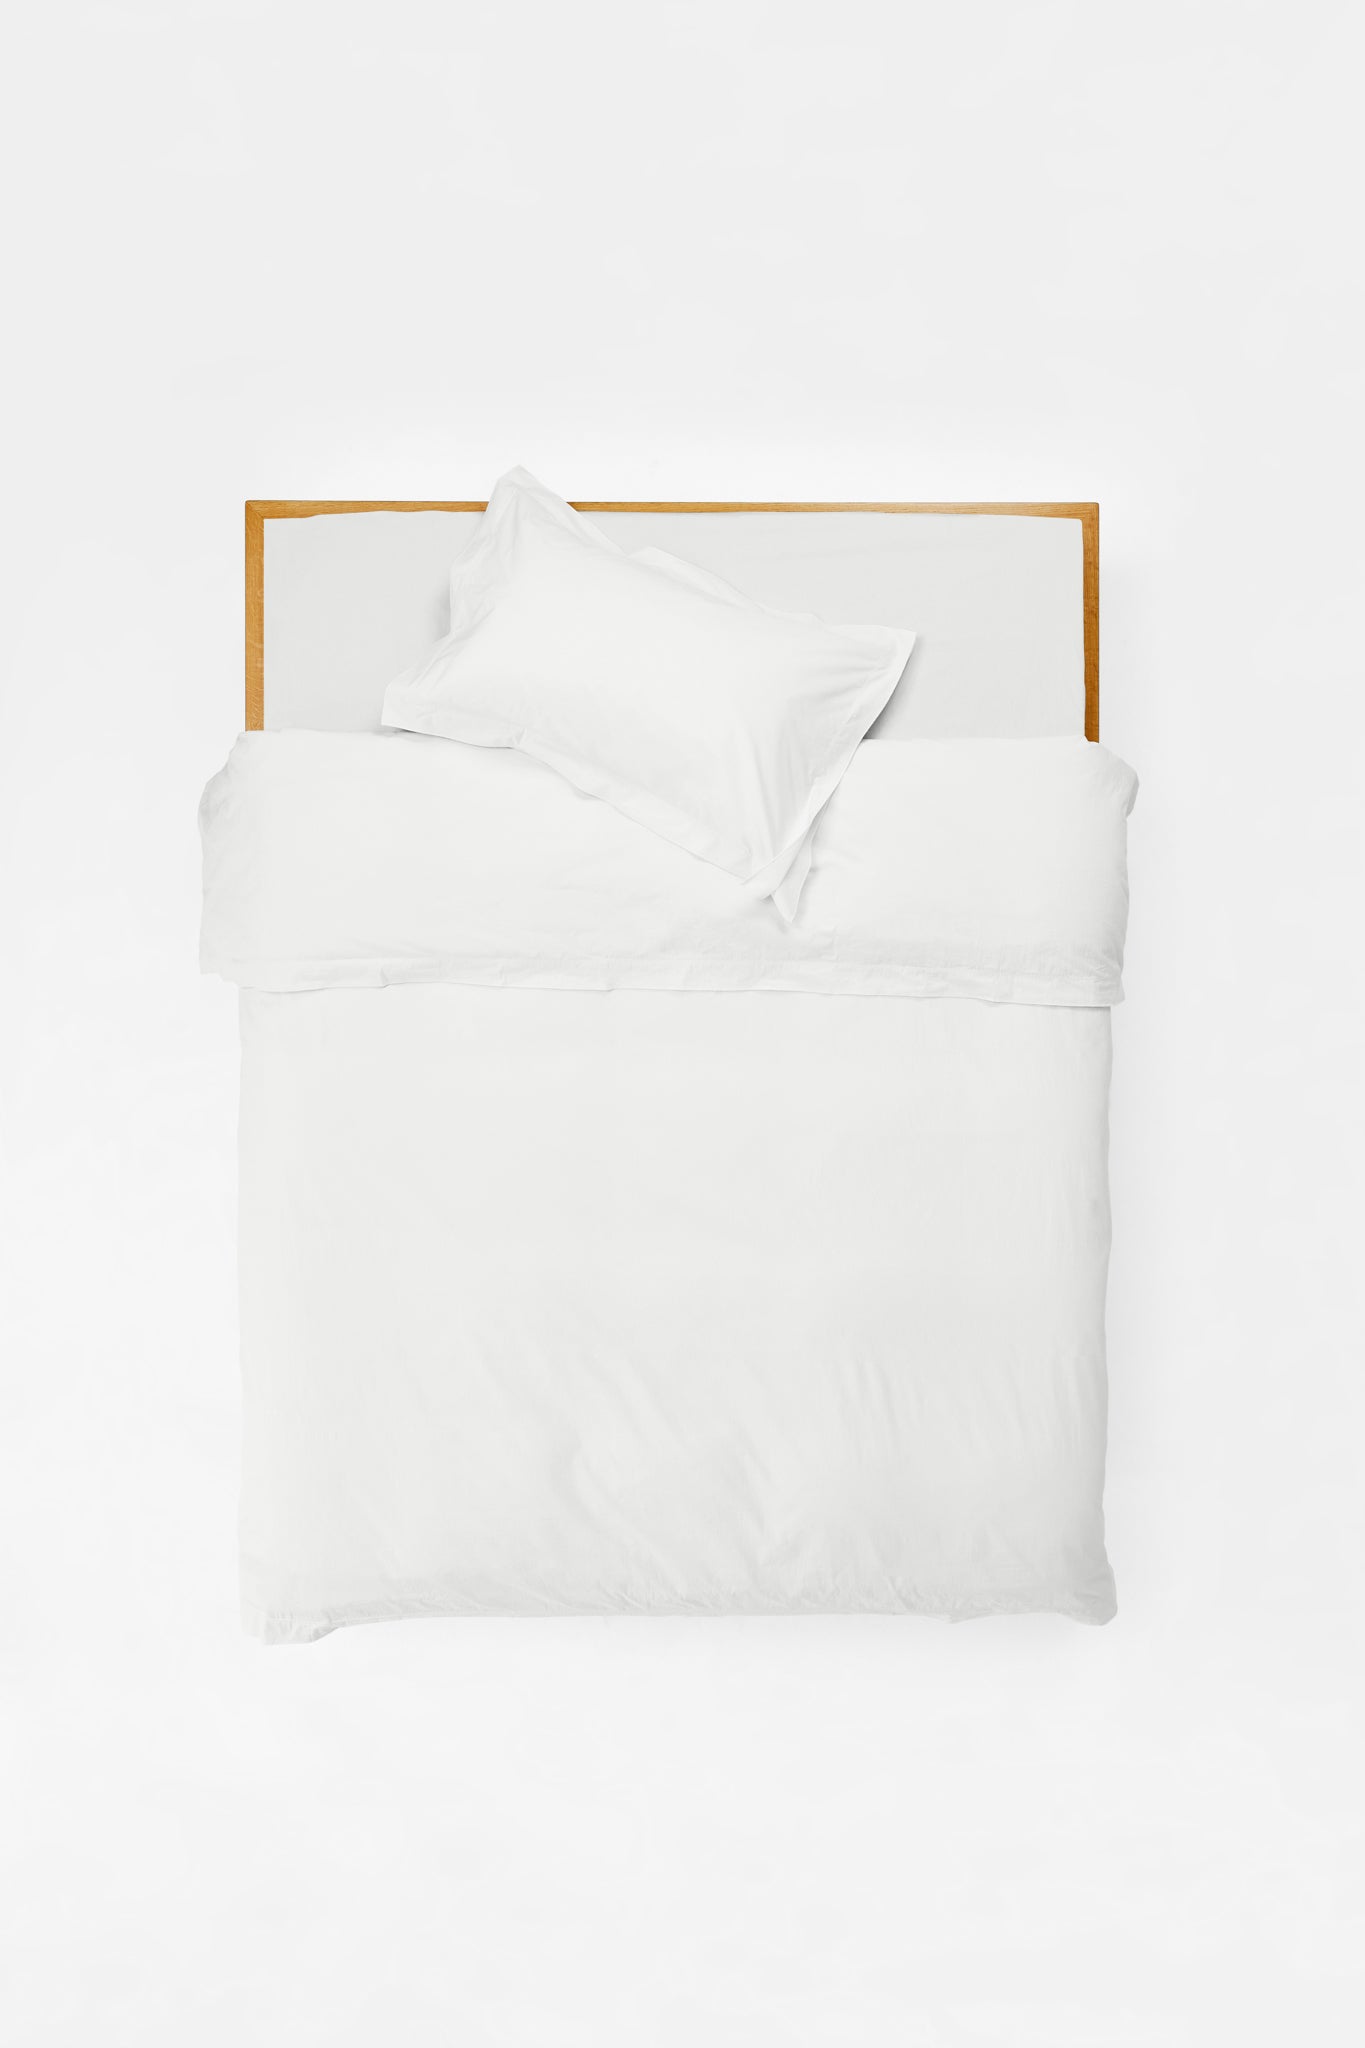 Pillowcase Pair in Prism